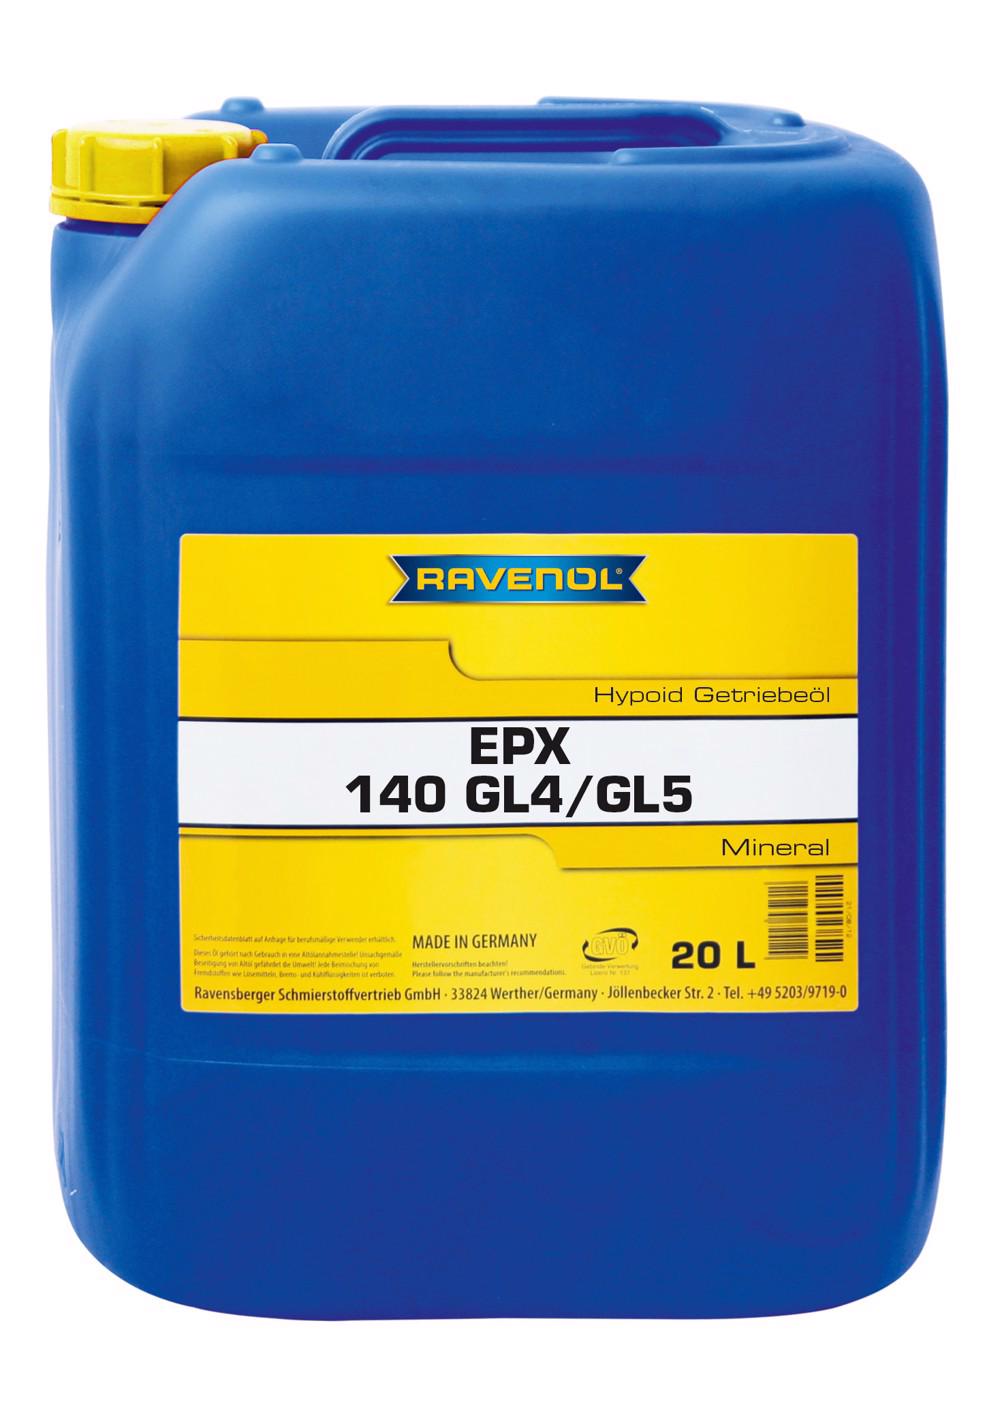 RAVENOL Getriebeoel EPX SAE 140 GL4/GL5  20 L